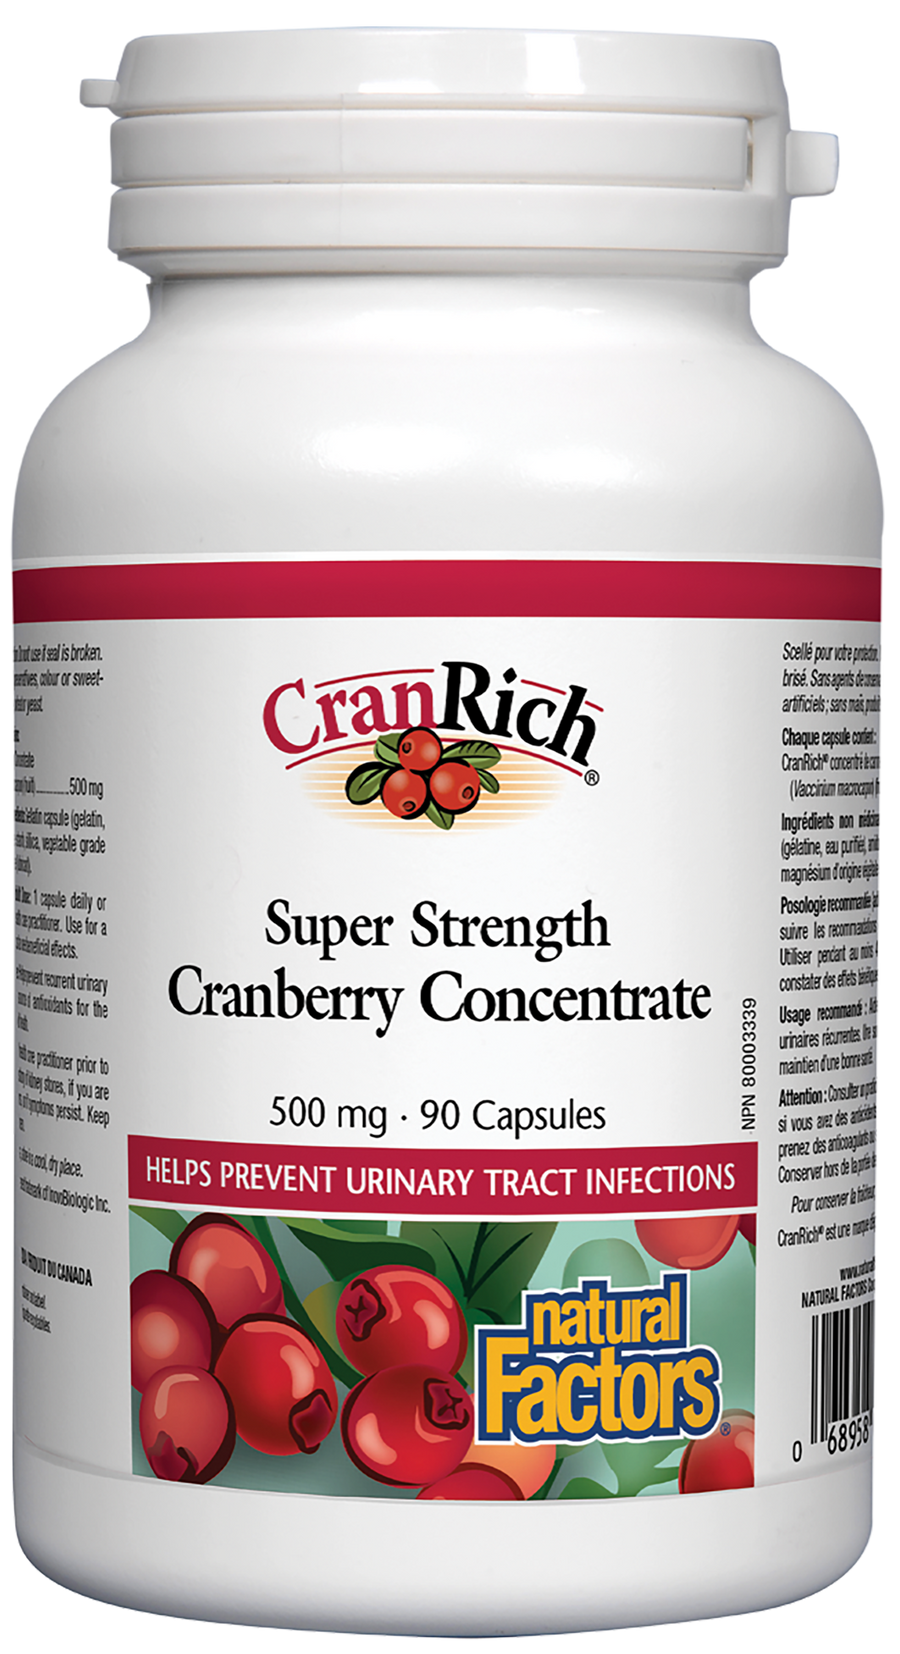 Natural Factors CranRich Super Strength Cranberry Concentrate Capsules